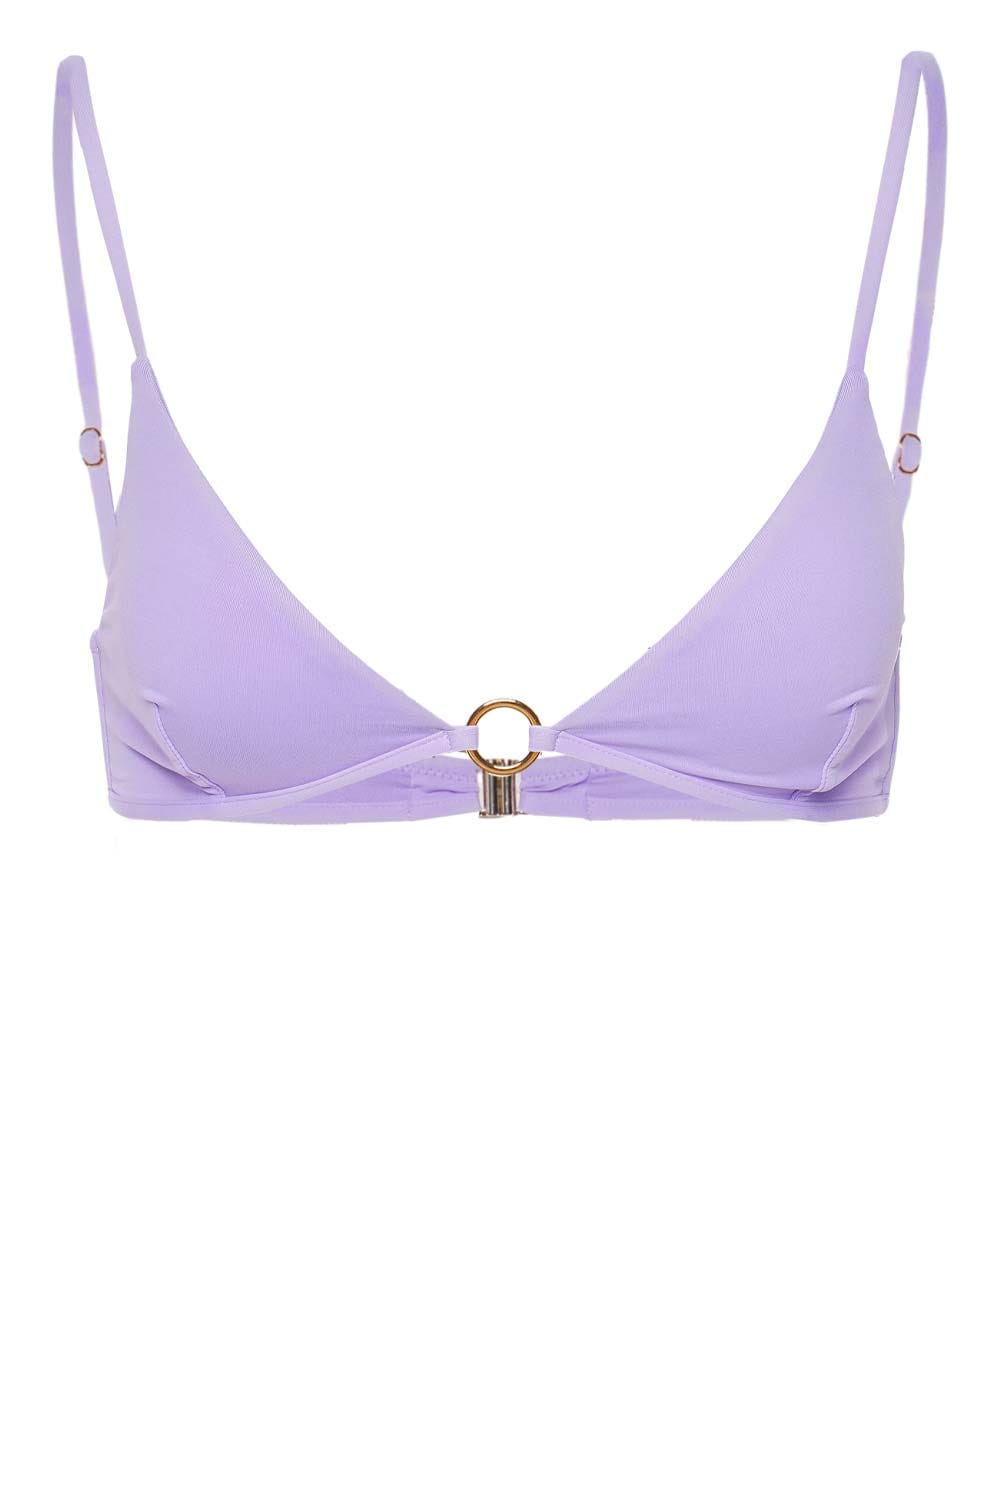 Melissa Odabash Greece Lavender Triangle Bikini Top